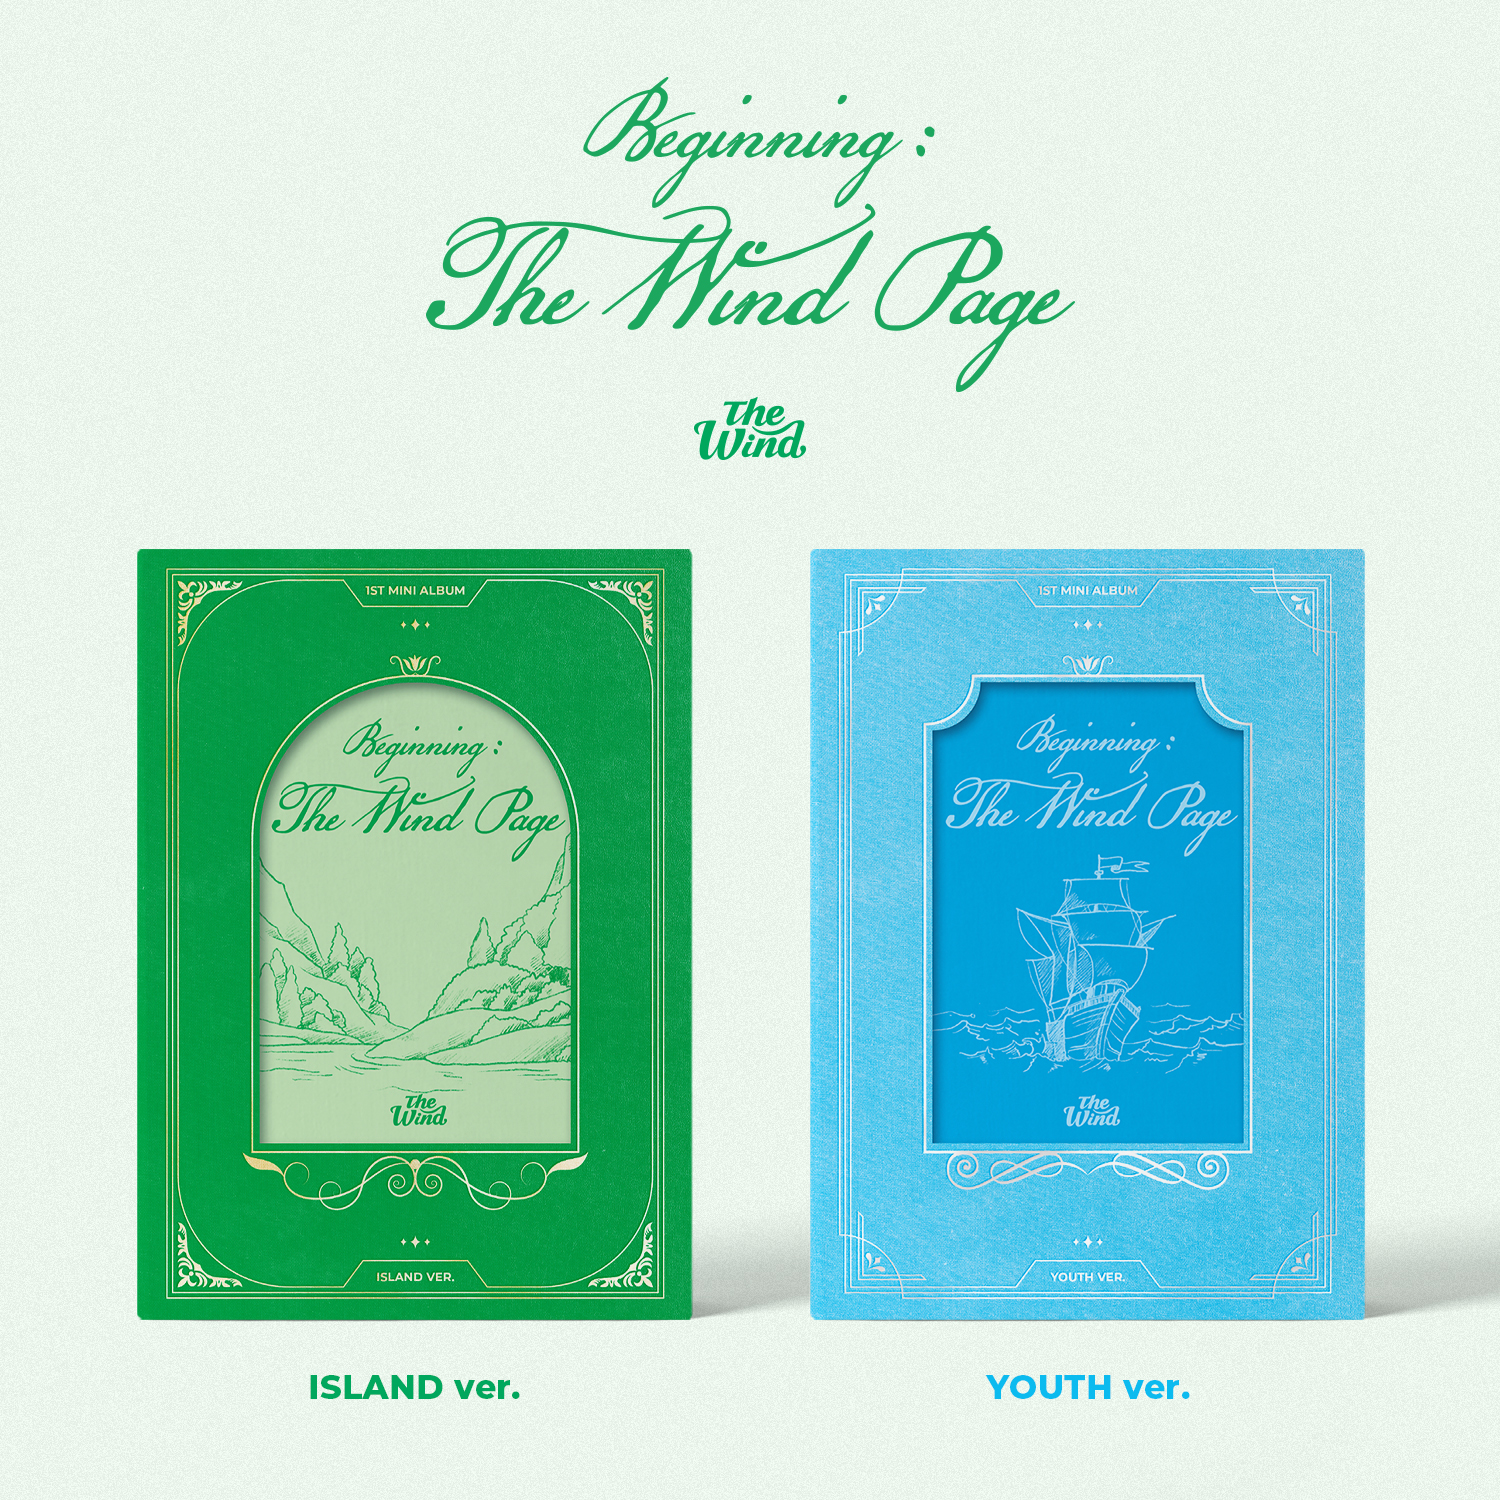 [全款 裸专] [线下签售活动] [2CD 套装] The Wind - 迷你1辑 [Beginning : The Wind Page] (ISLAND Ver. + YOUTH Ver.)_TheWind_SundialDreams